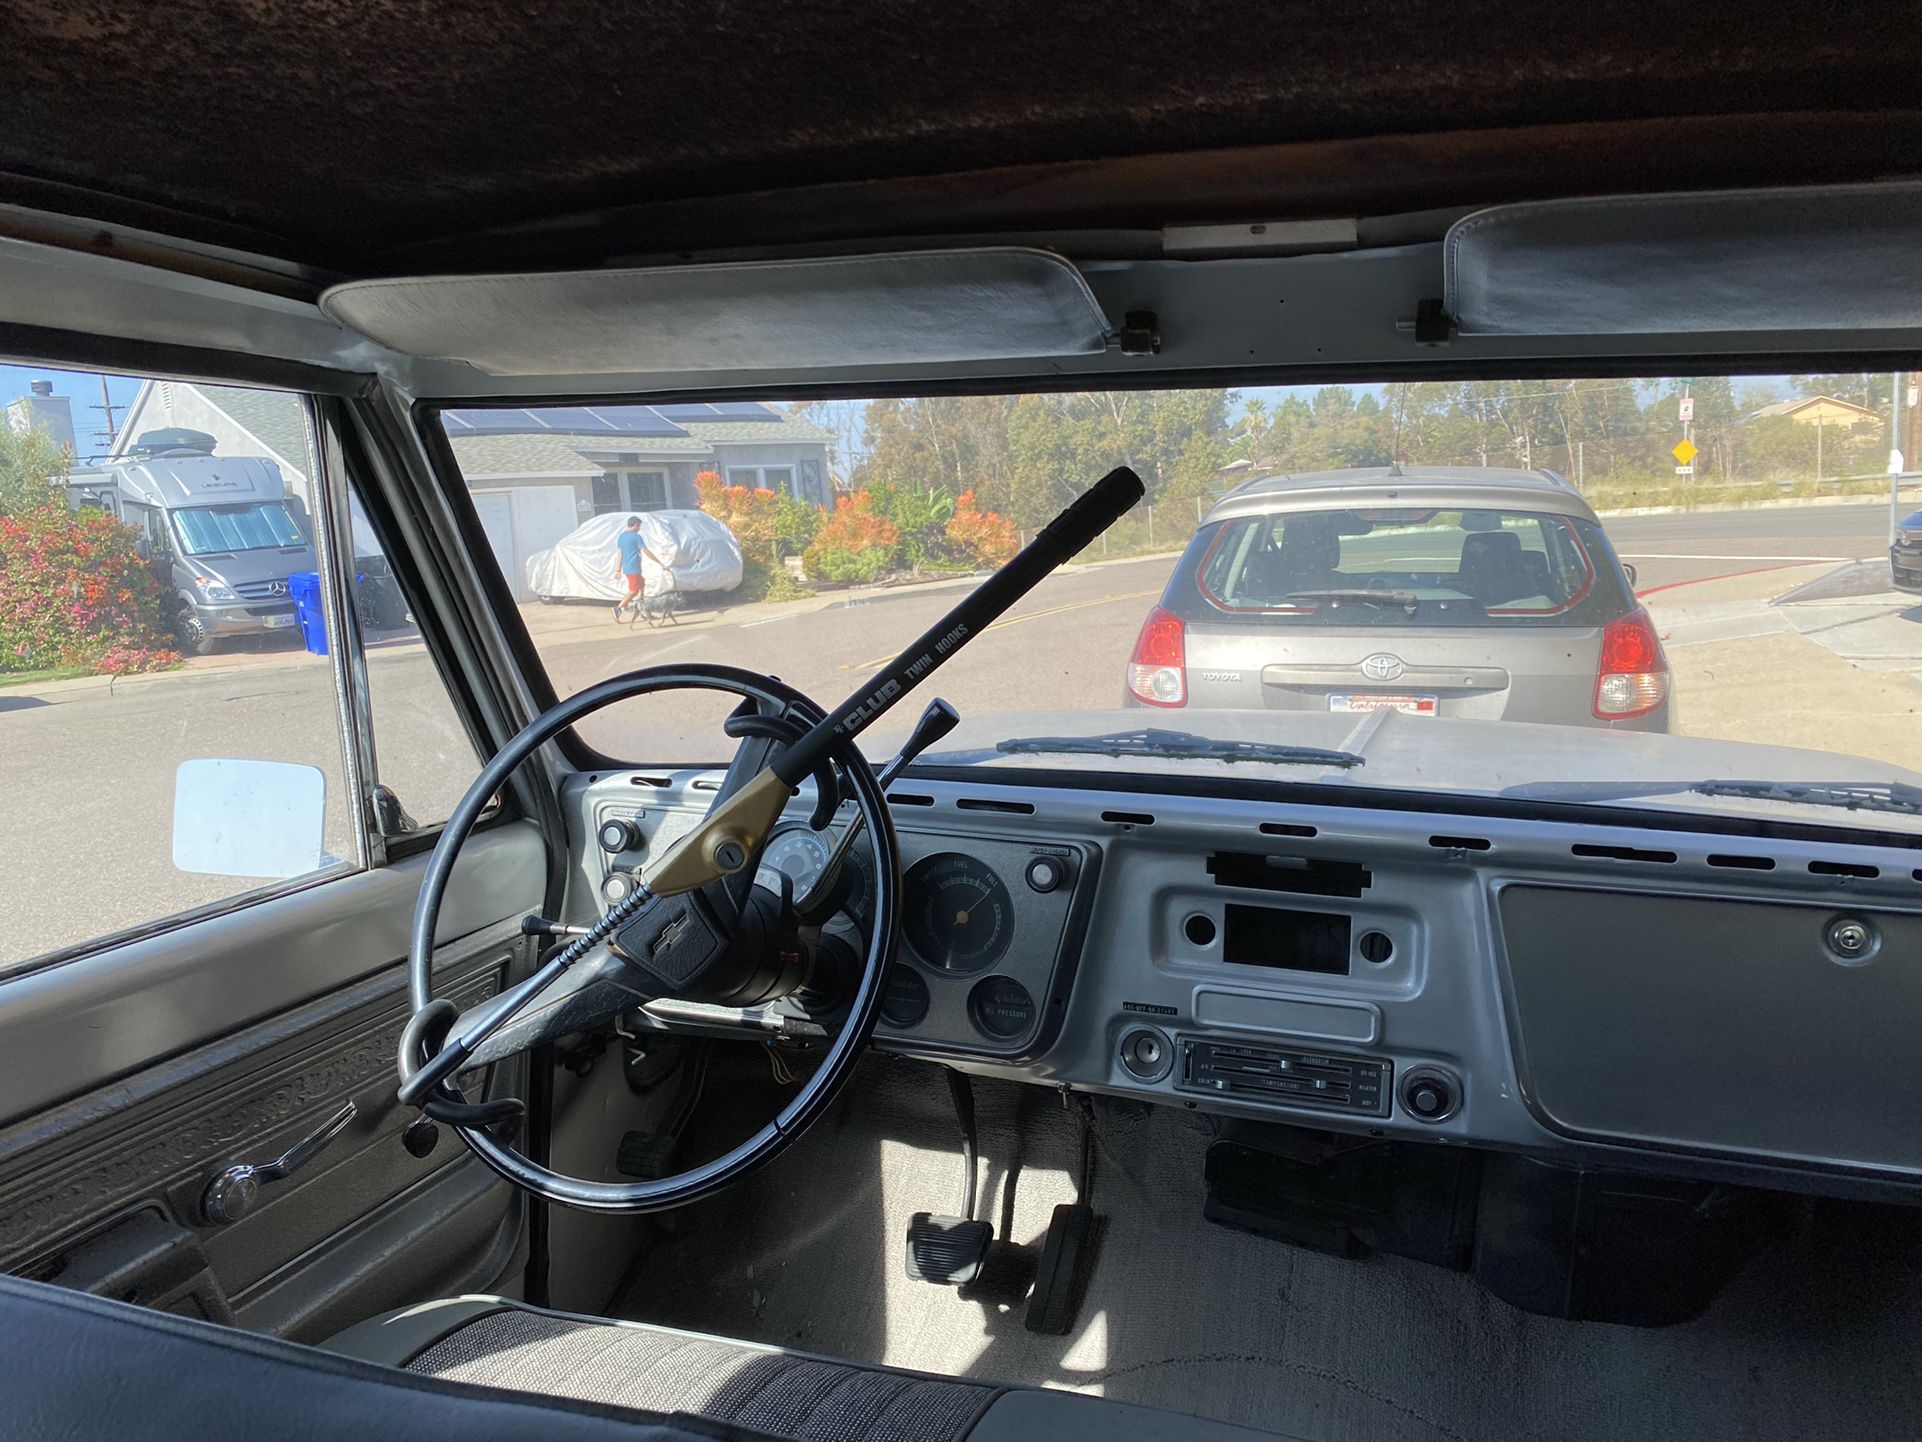 1972 Chevrolet Suburban